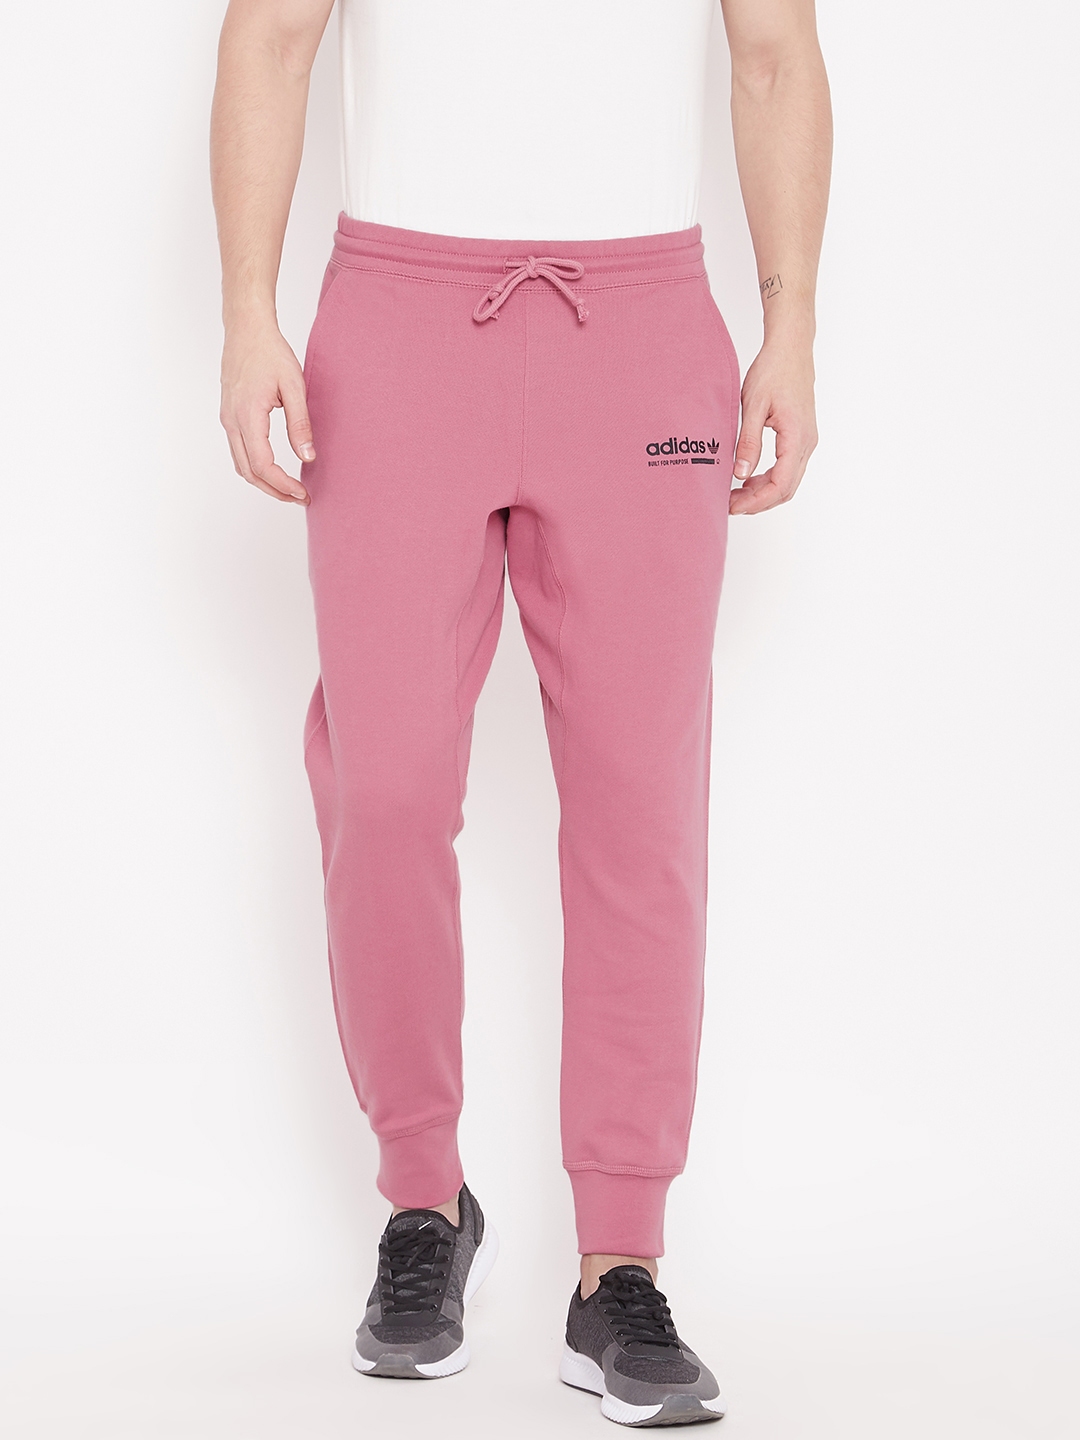 adidas  Pants  Jumpsuits  Adidas Womens Peachy Pink Tracksuit Pants  Small  Poshmark